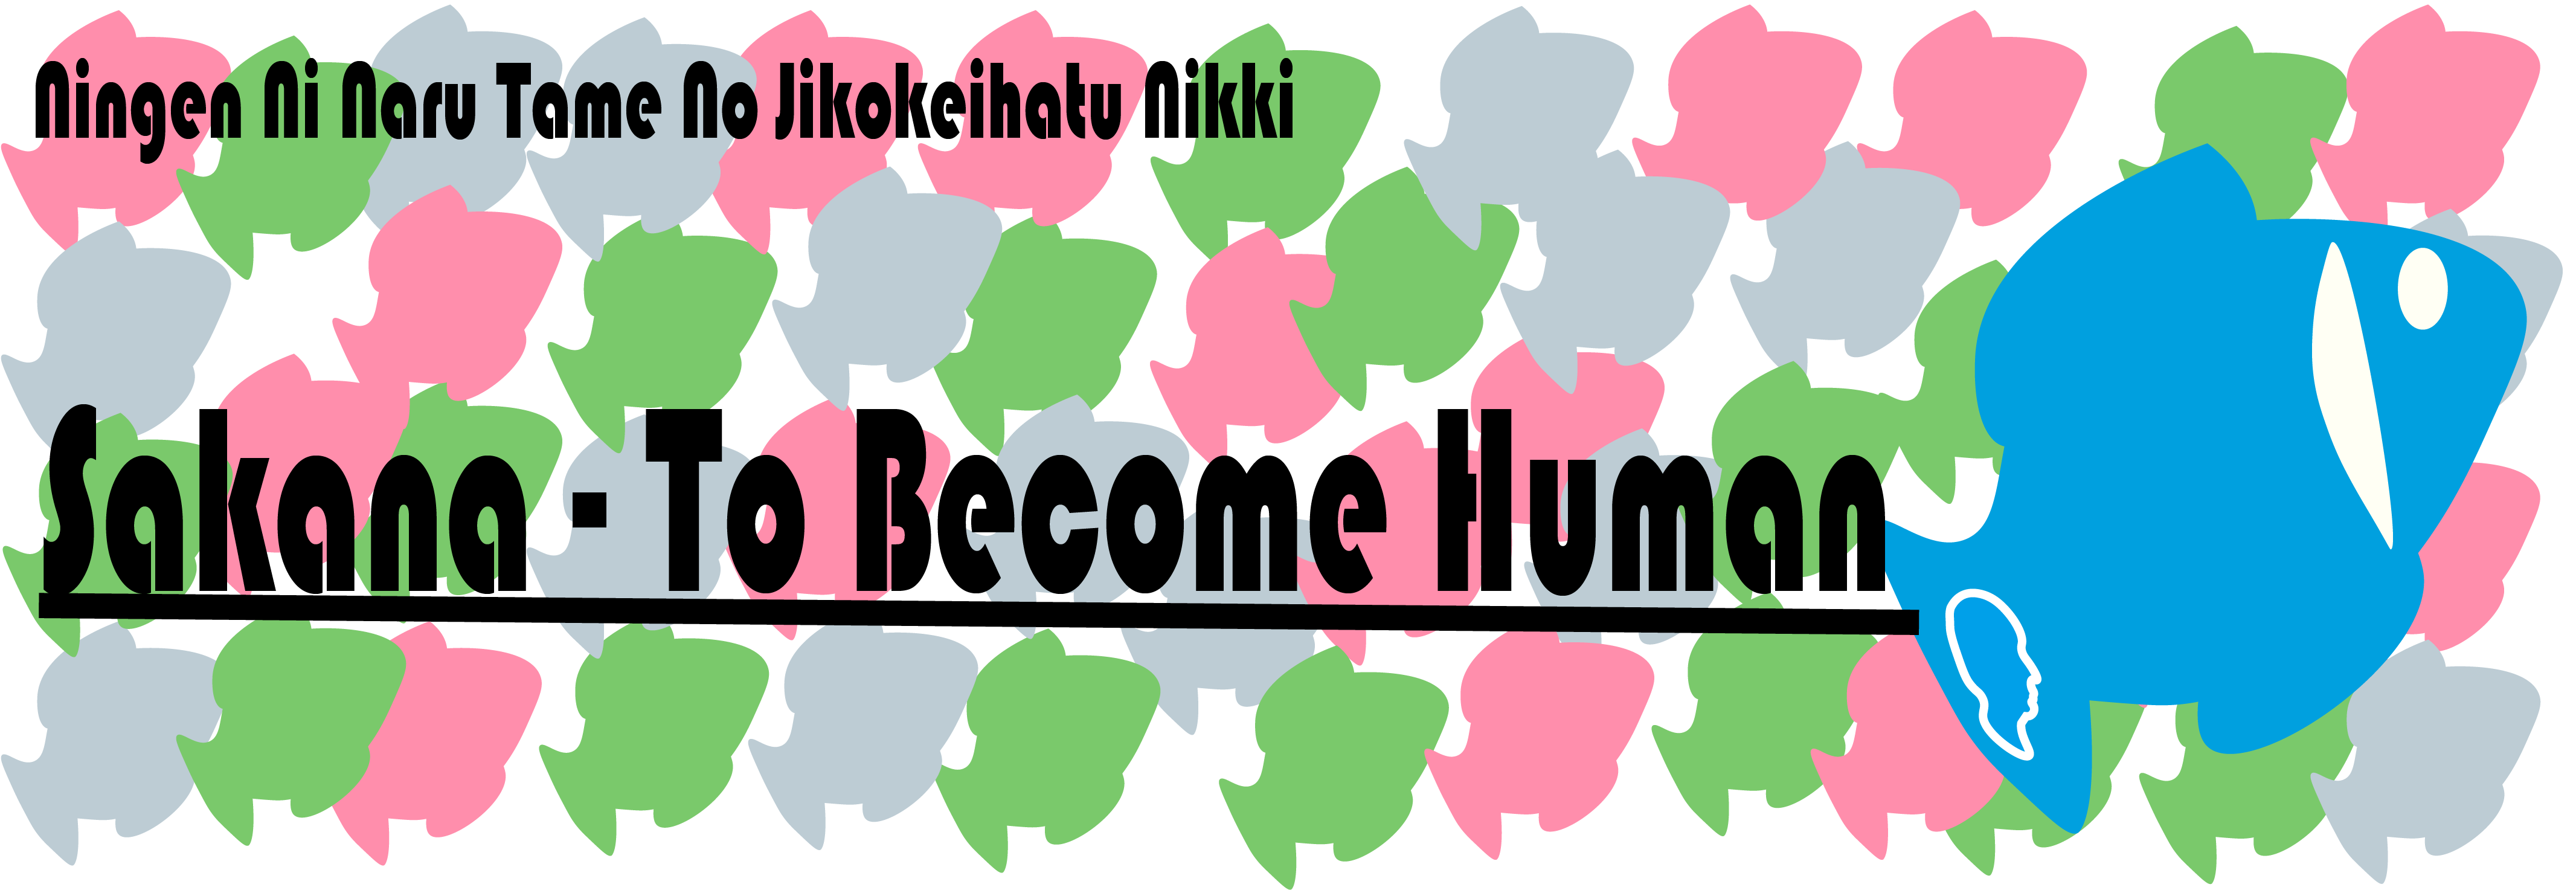 sakana - to_become_human